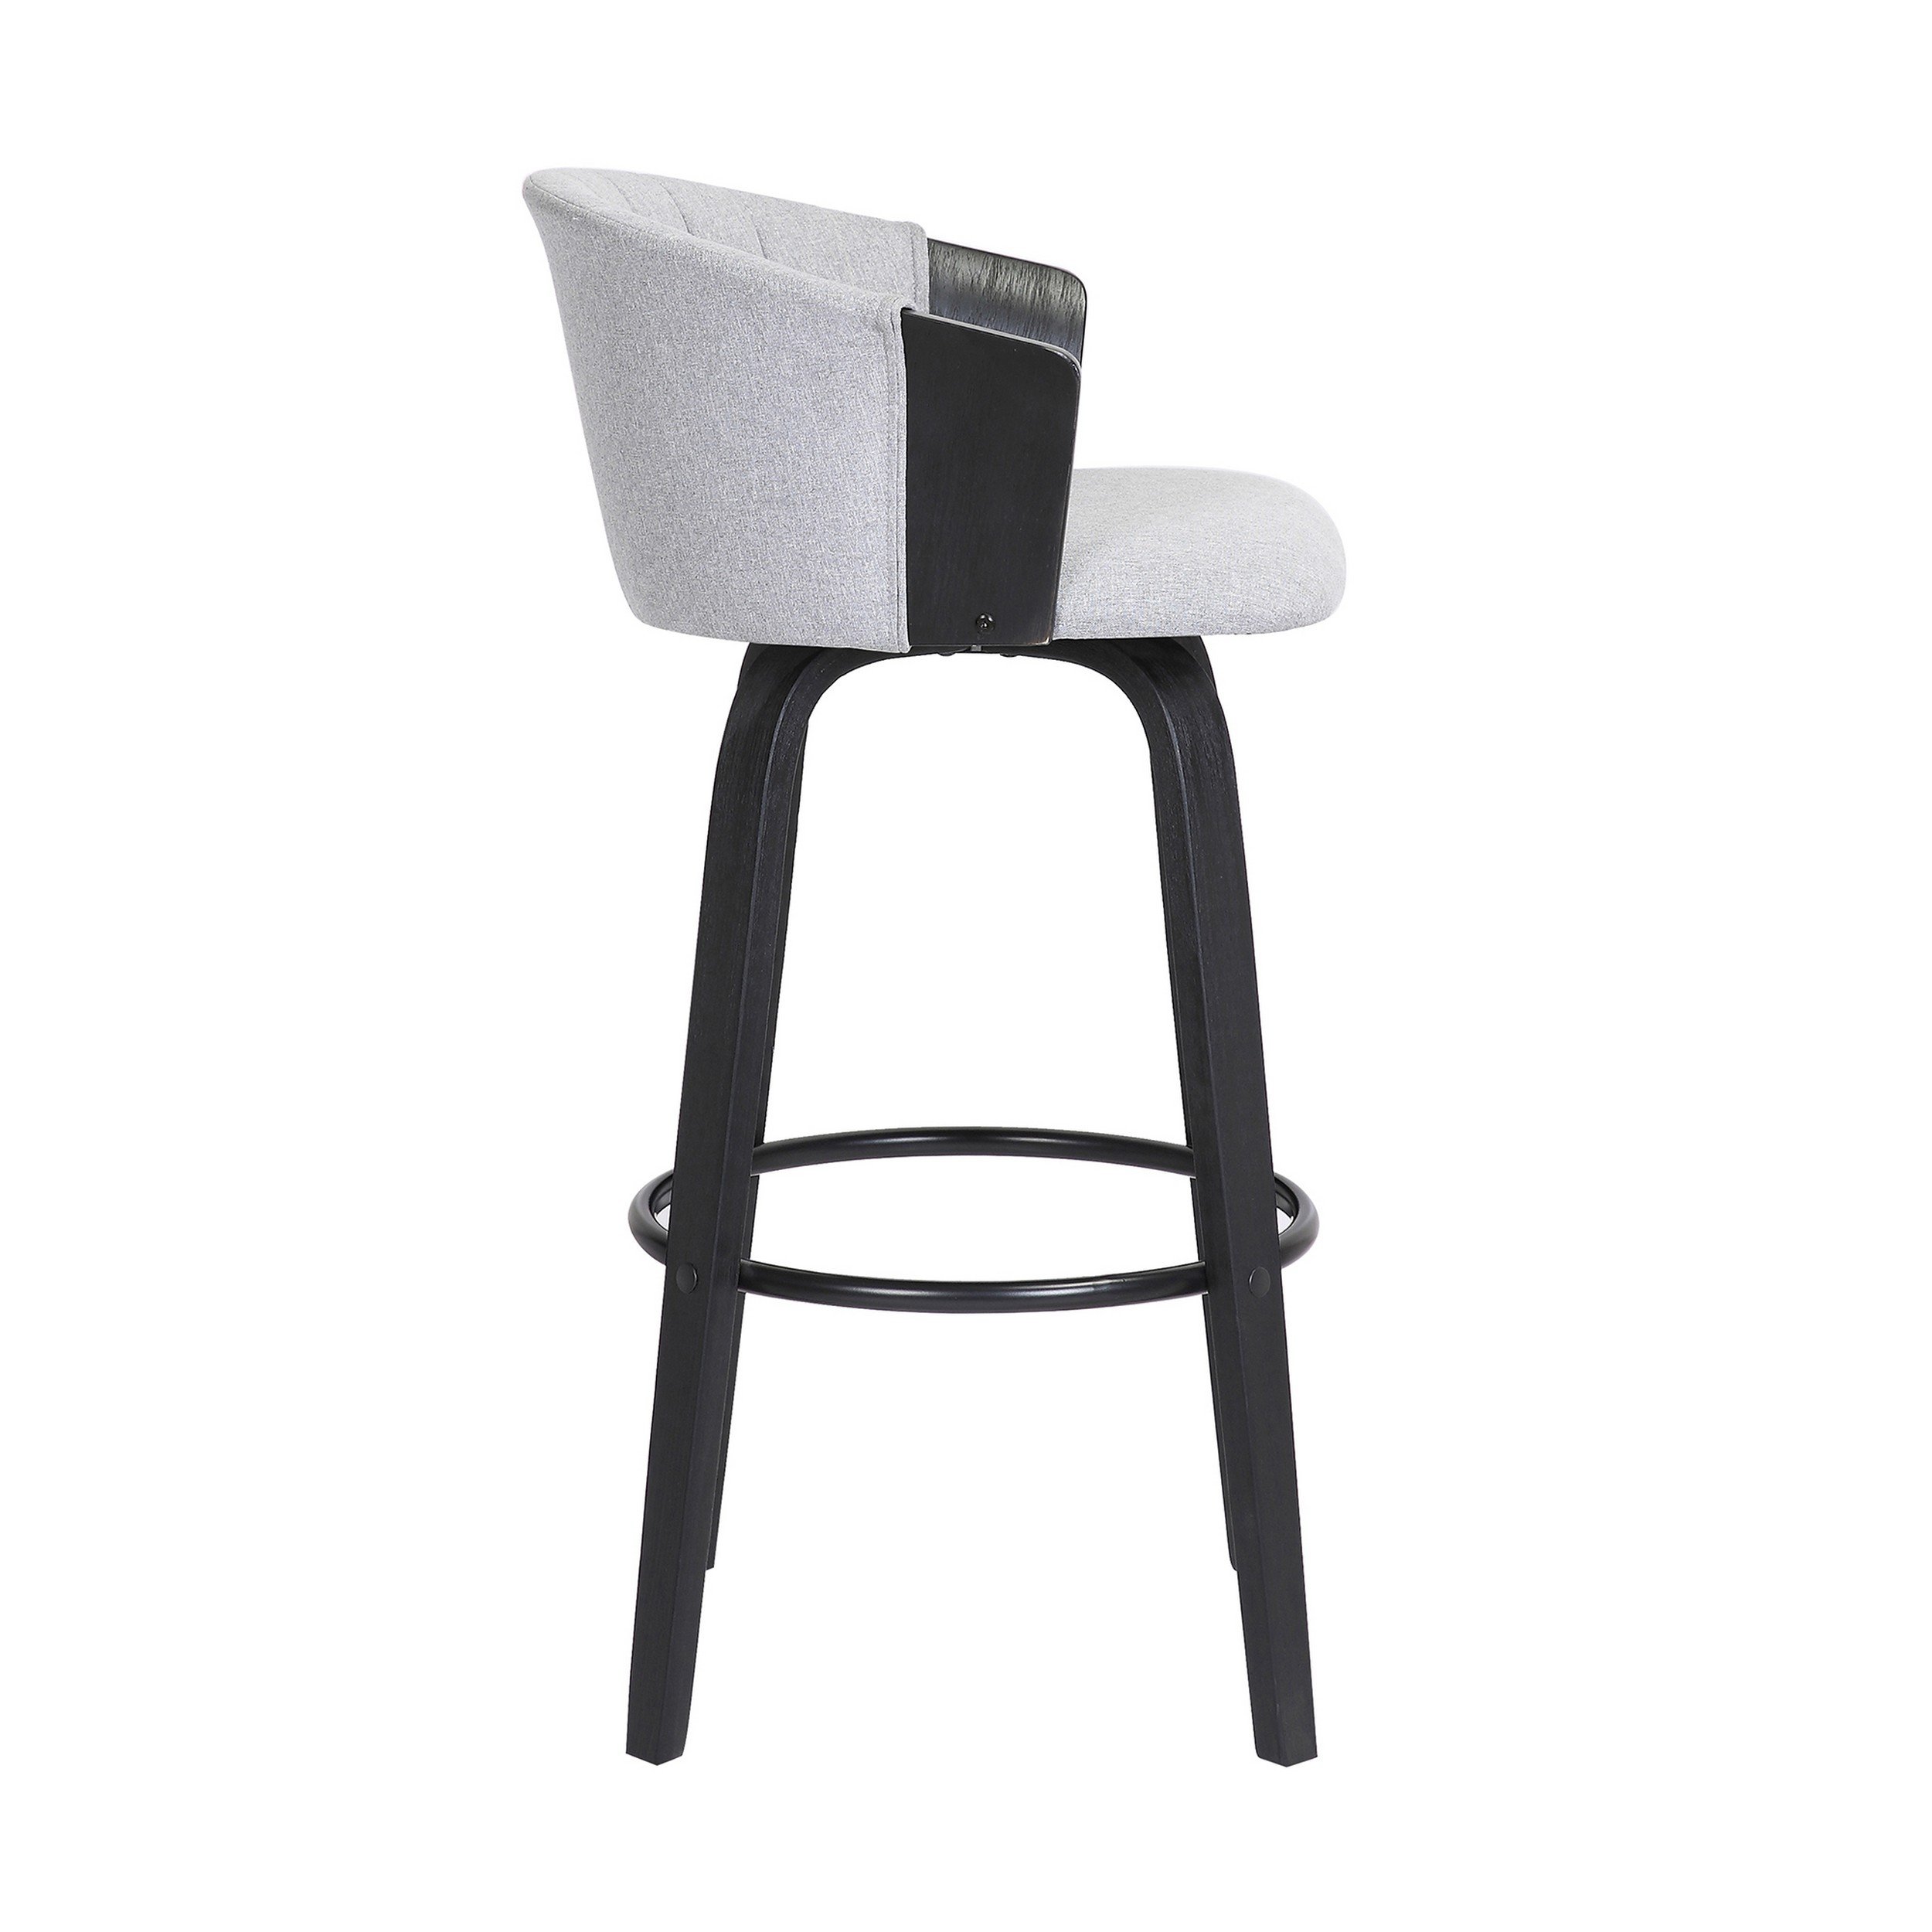 Oja 26 Inch Swivel Counter Stool Chair, Light Gray Fabric, Curved, Black - Saltoro Sherpi